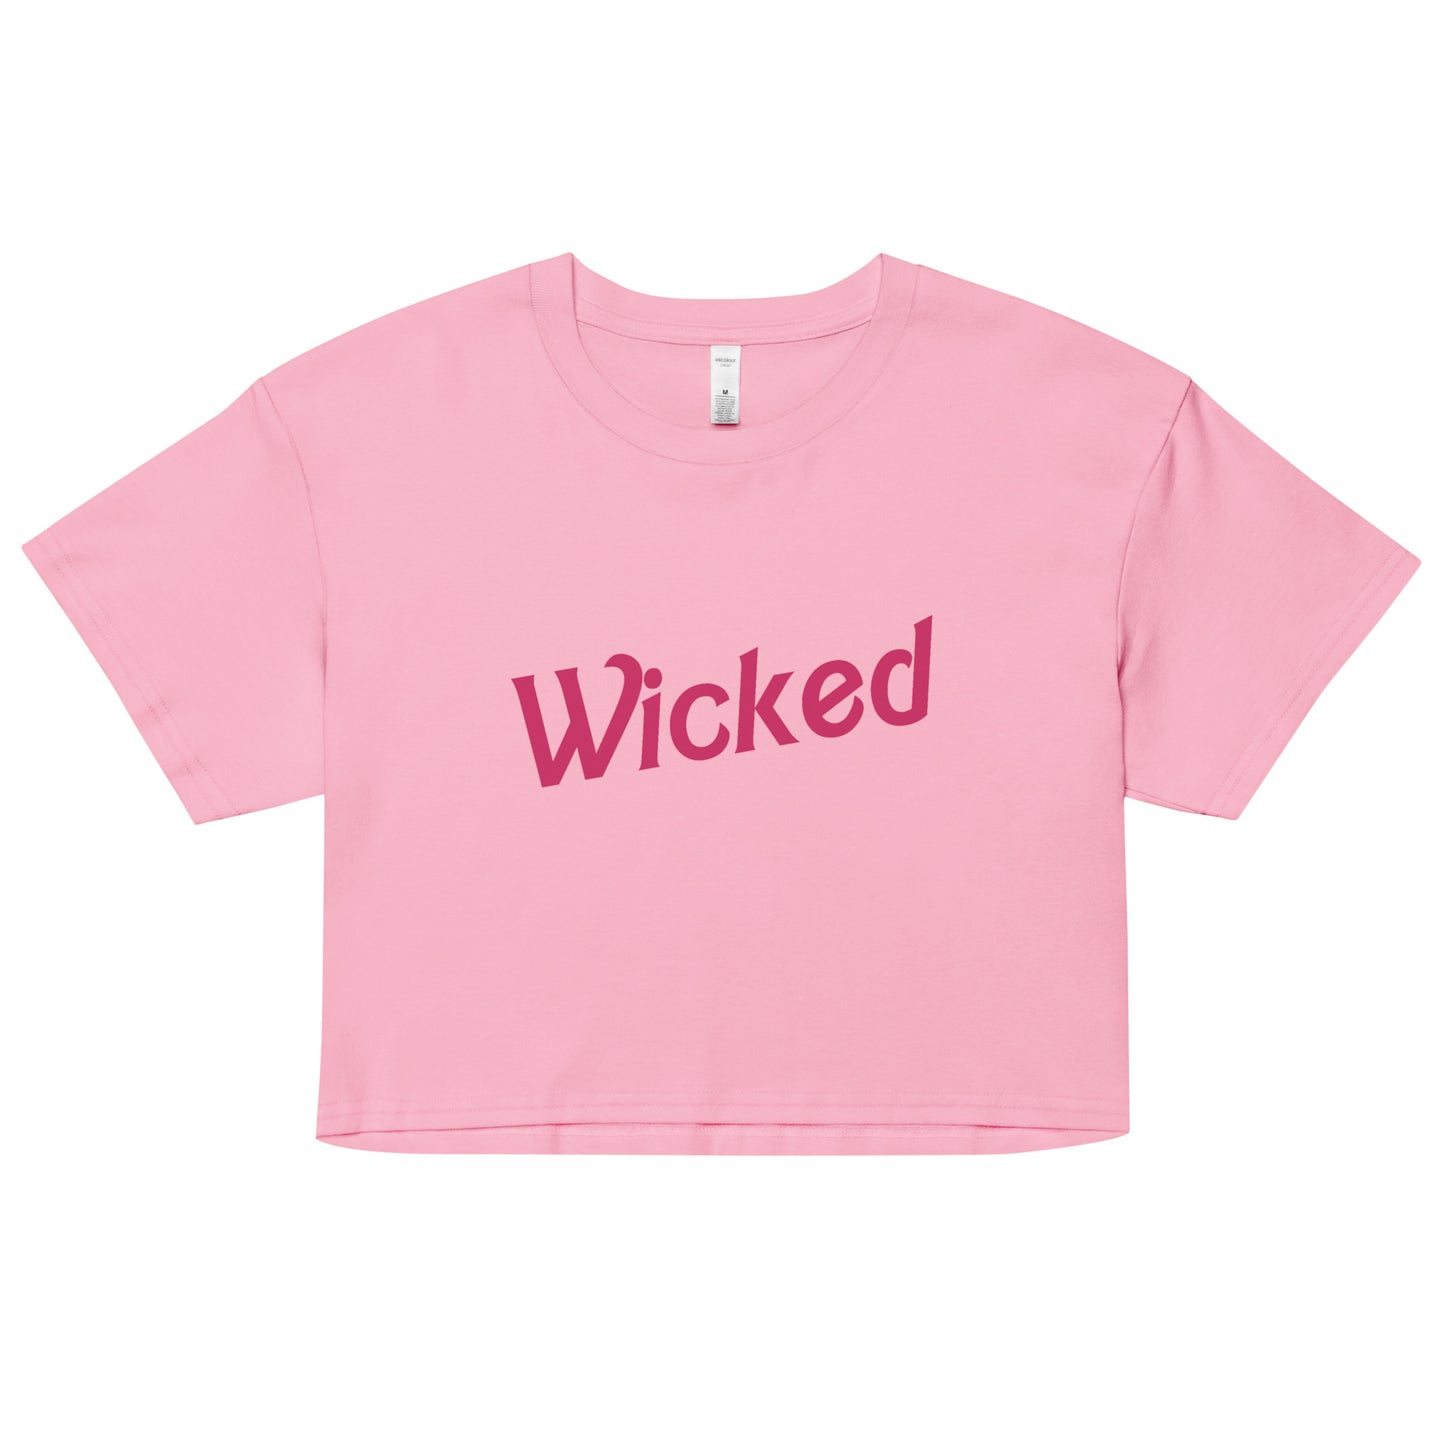 Pink Wicked Crop Top